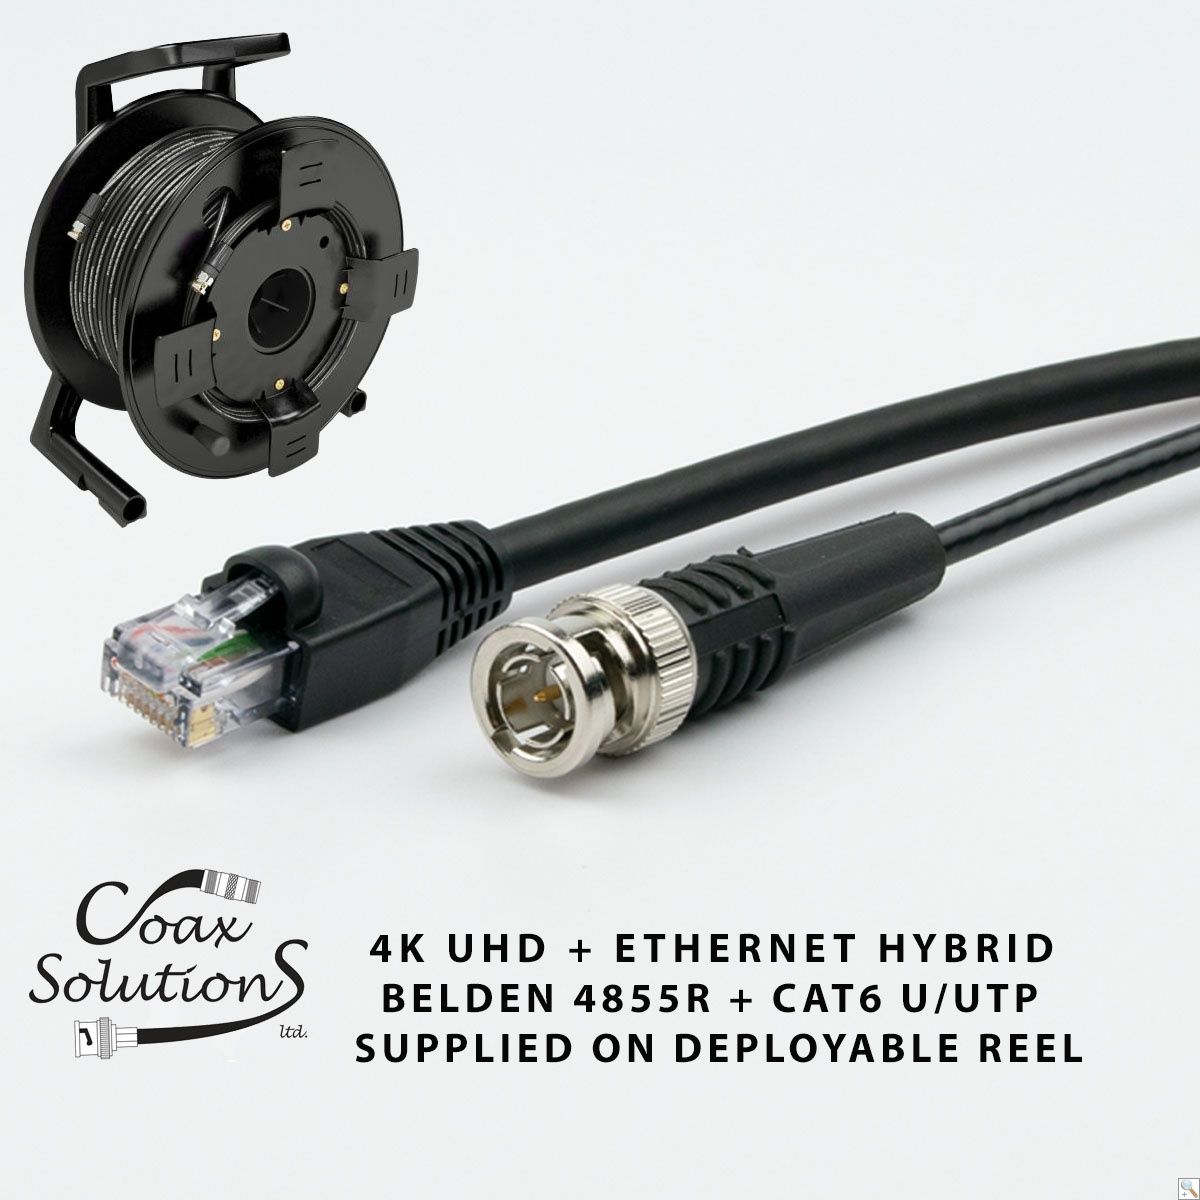 Belden 4855R + CAT6 Hybrid 4K UHD Patch Cable + Deployable Reel